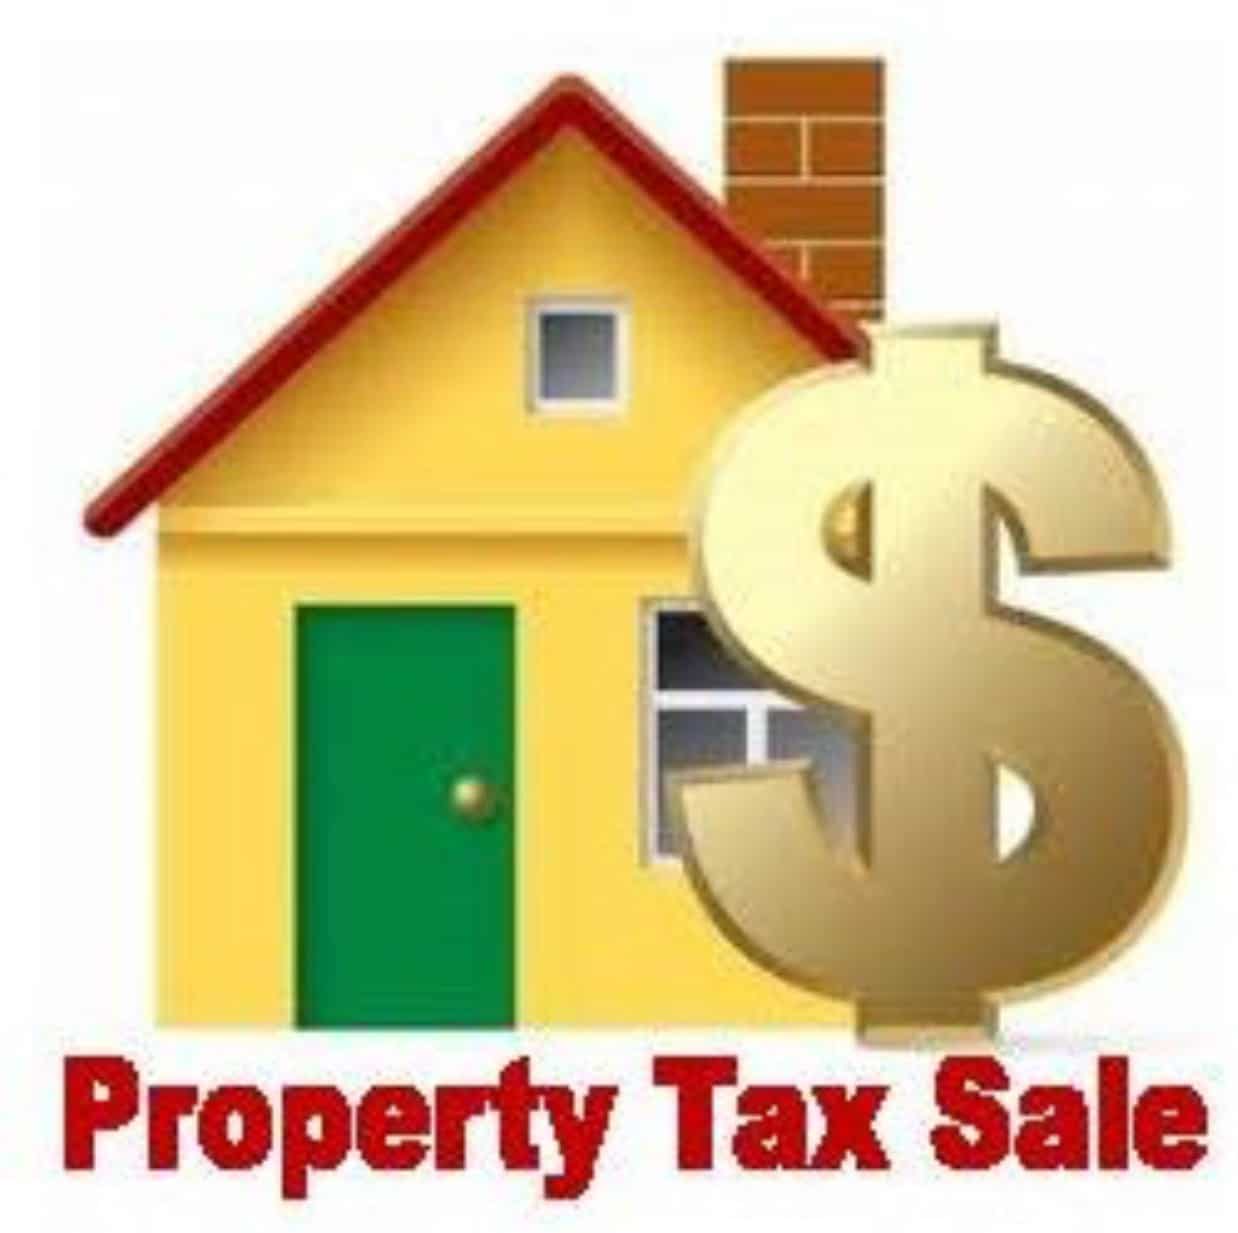 Pineville, LA / Property Tax Sale